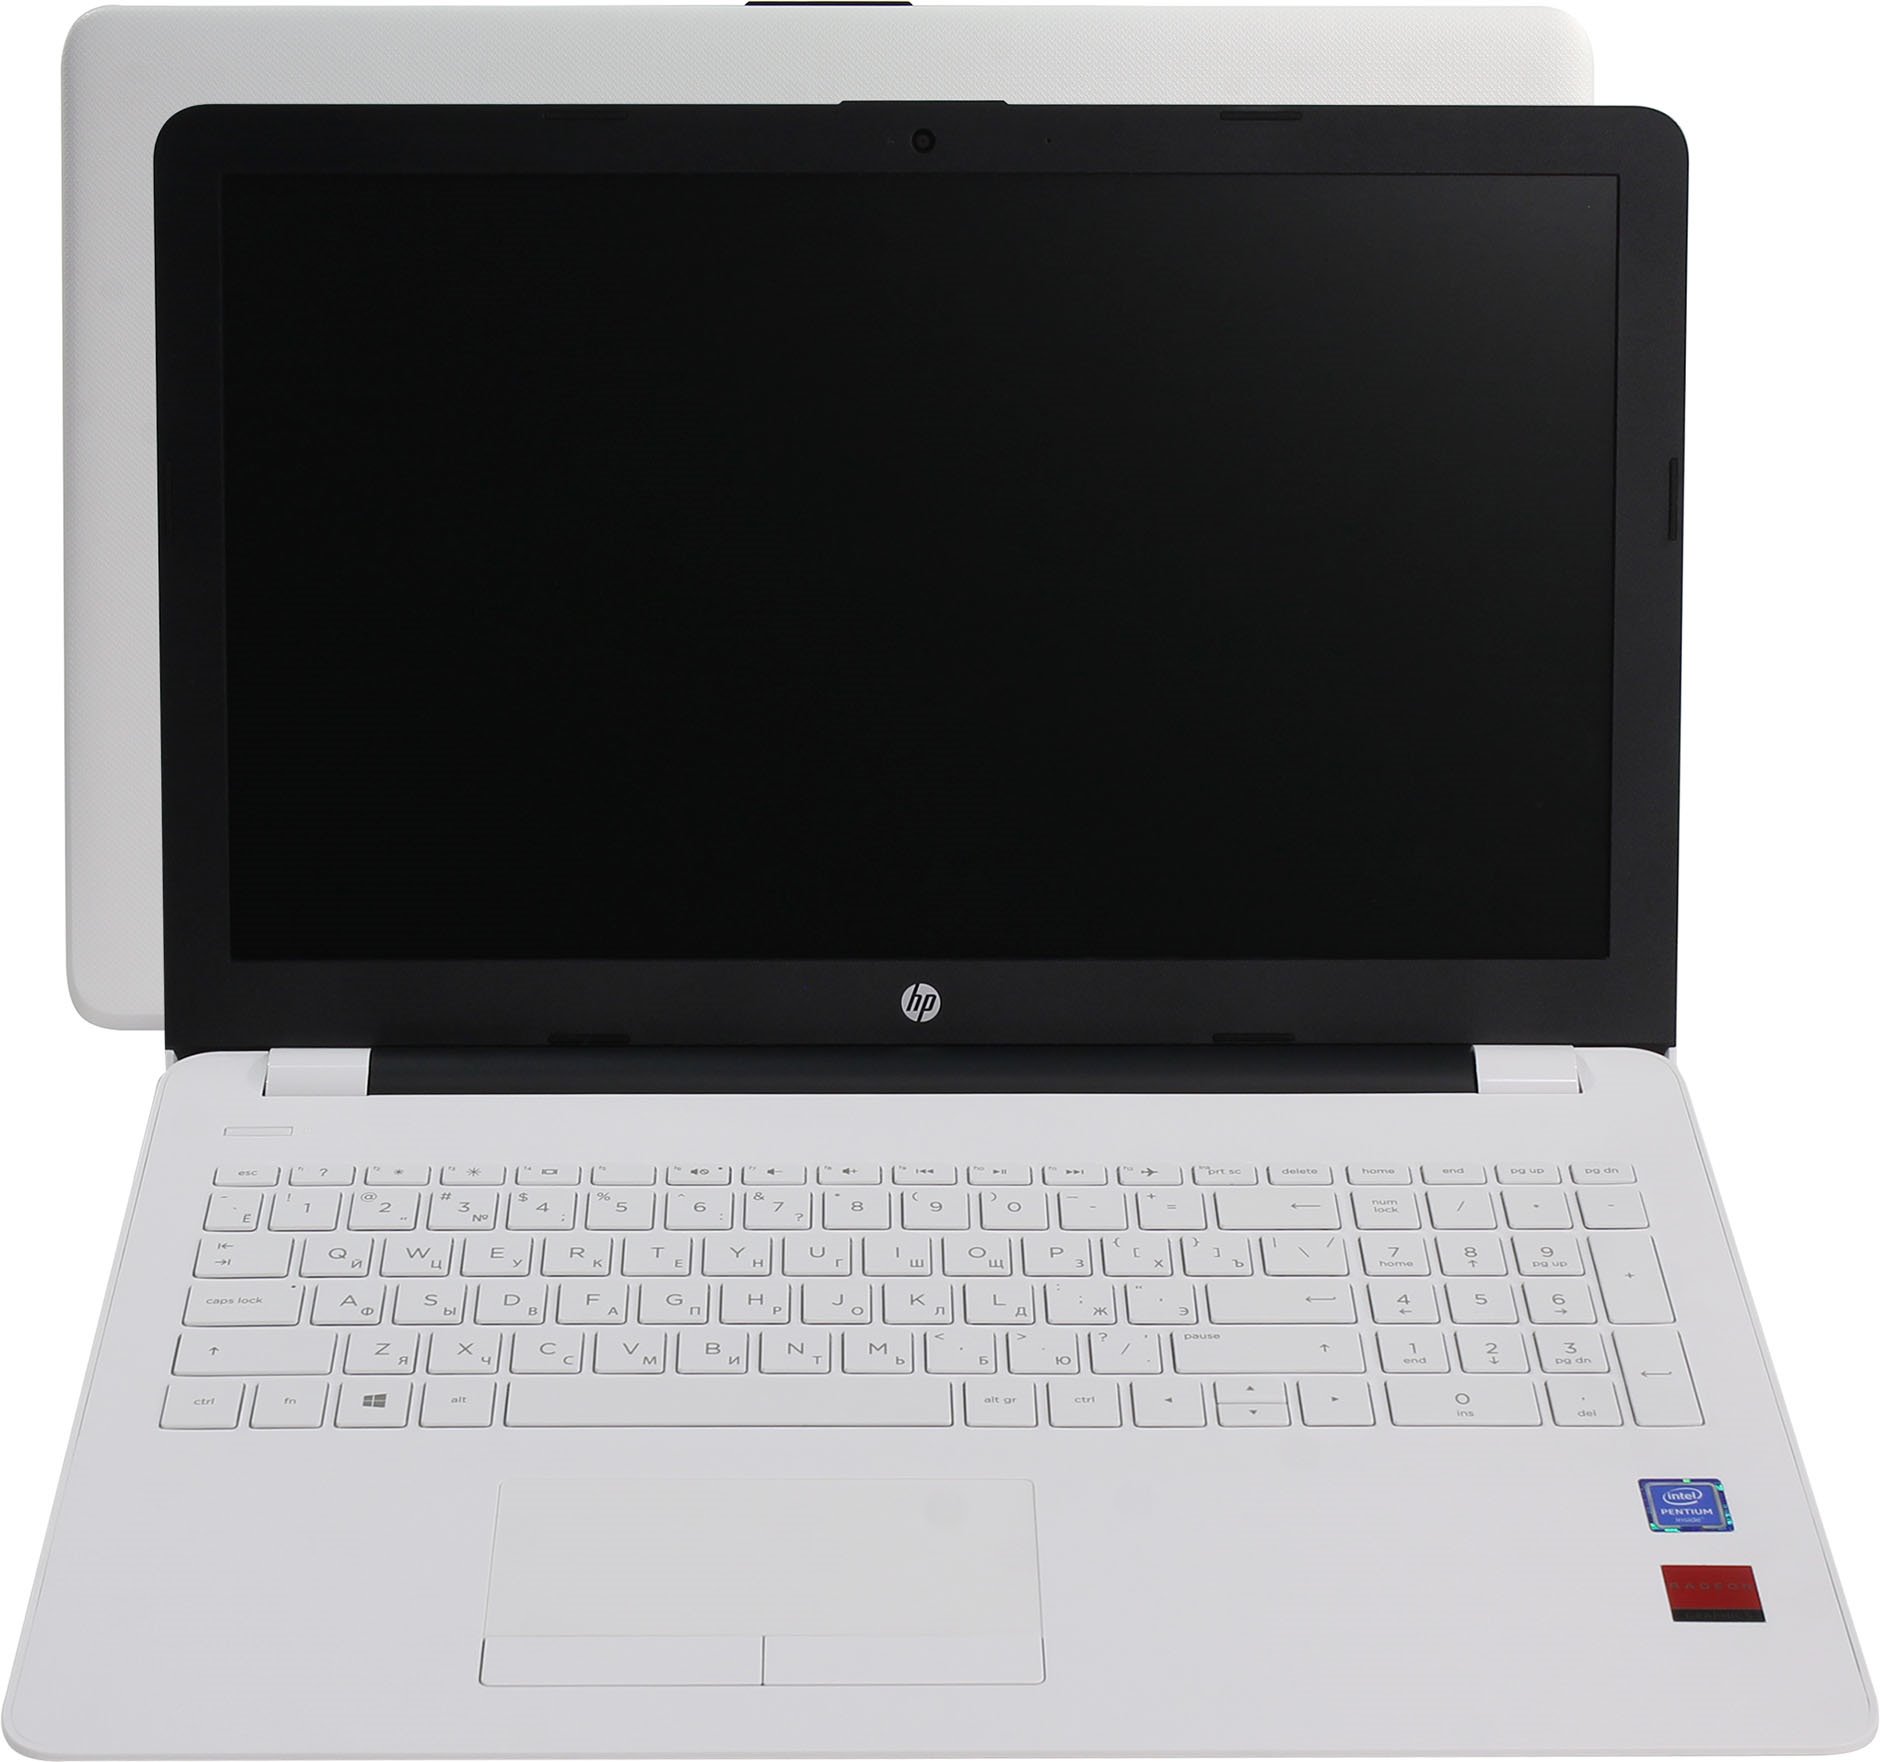 Ноутбук HP 15-bs048ur Intel Pentium N3710/4096Mb/500Gb/15.6 HD/AMD M520 2Gb/WiFi/BT/Windows 10 (white) (1VH47EA)